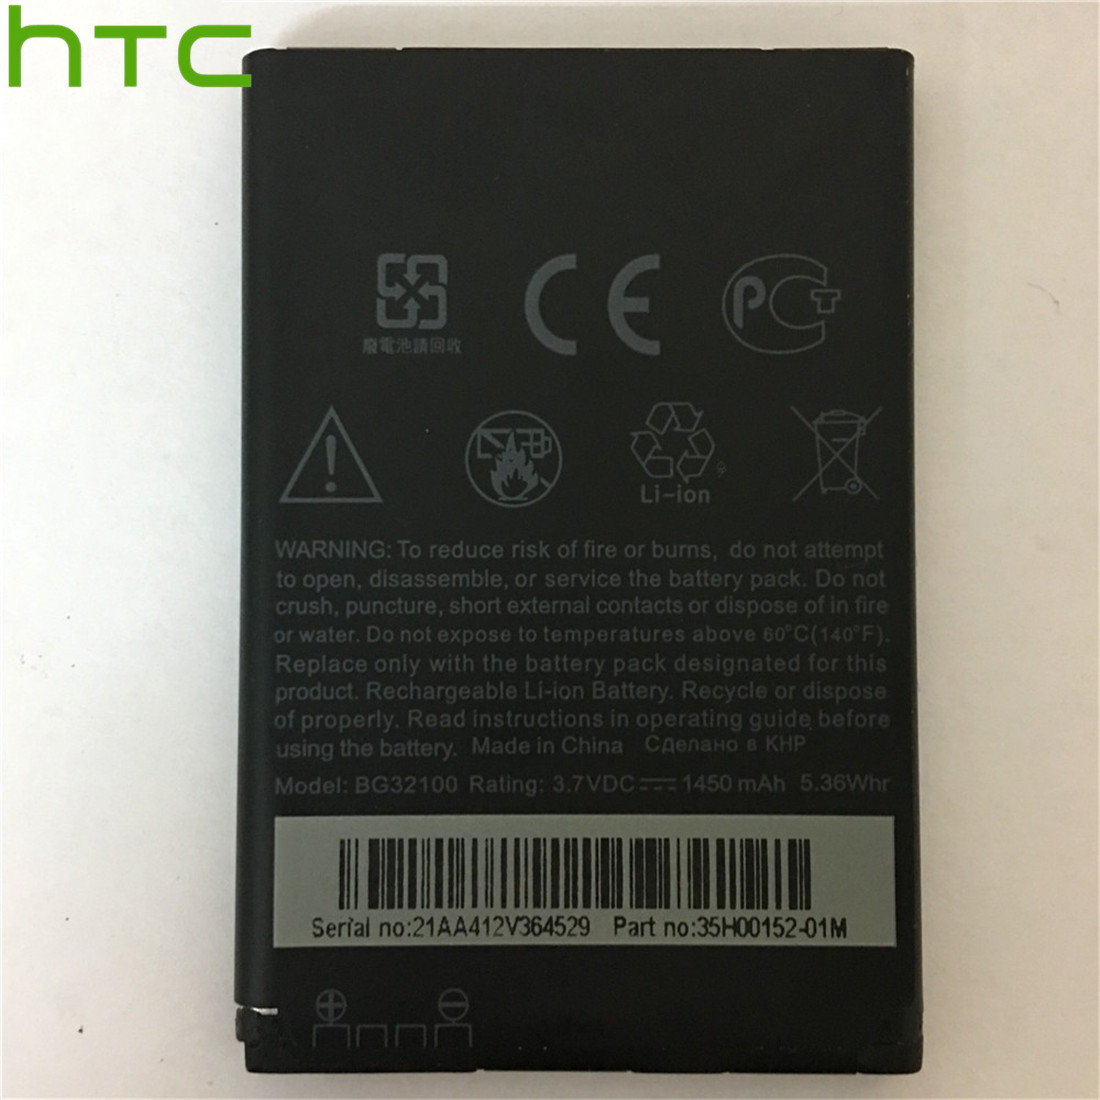 100% BG32100 1450mAh Batterij Voor HTC G11 Incredible S G12 G15 Desire s S510E S710e S710D c510e Smartphone